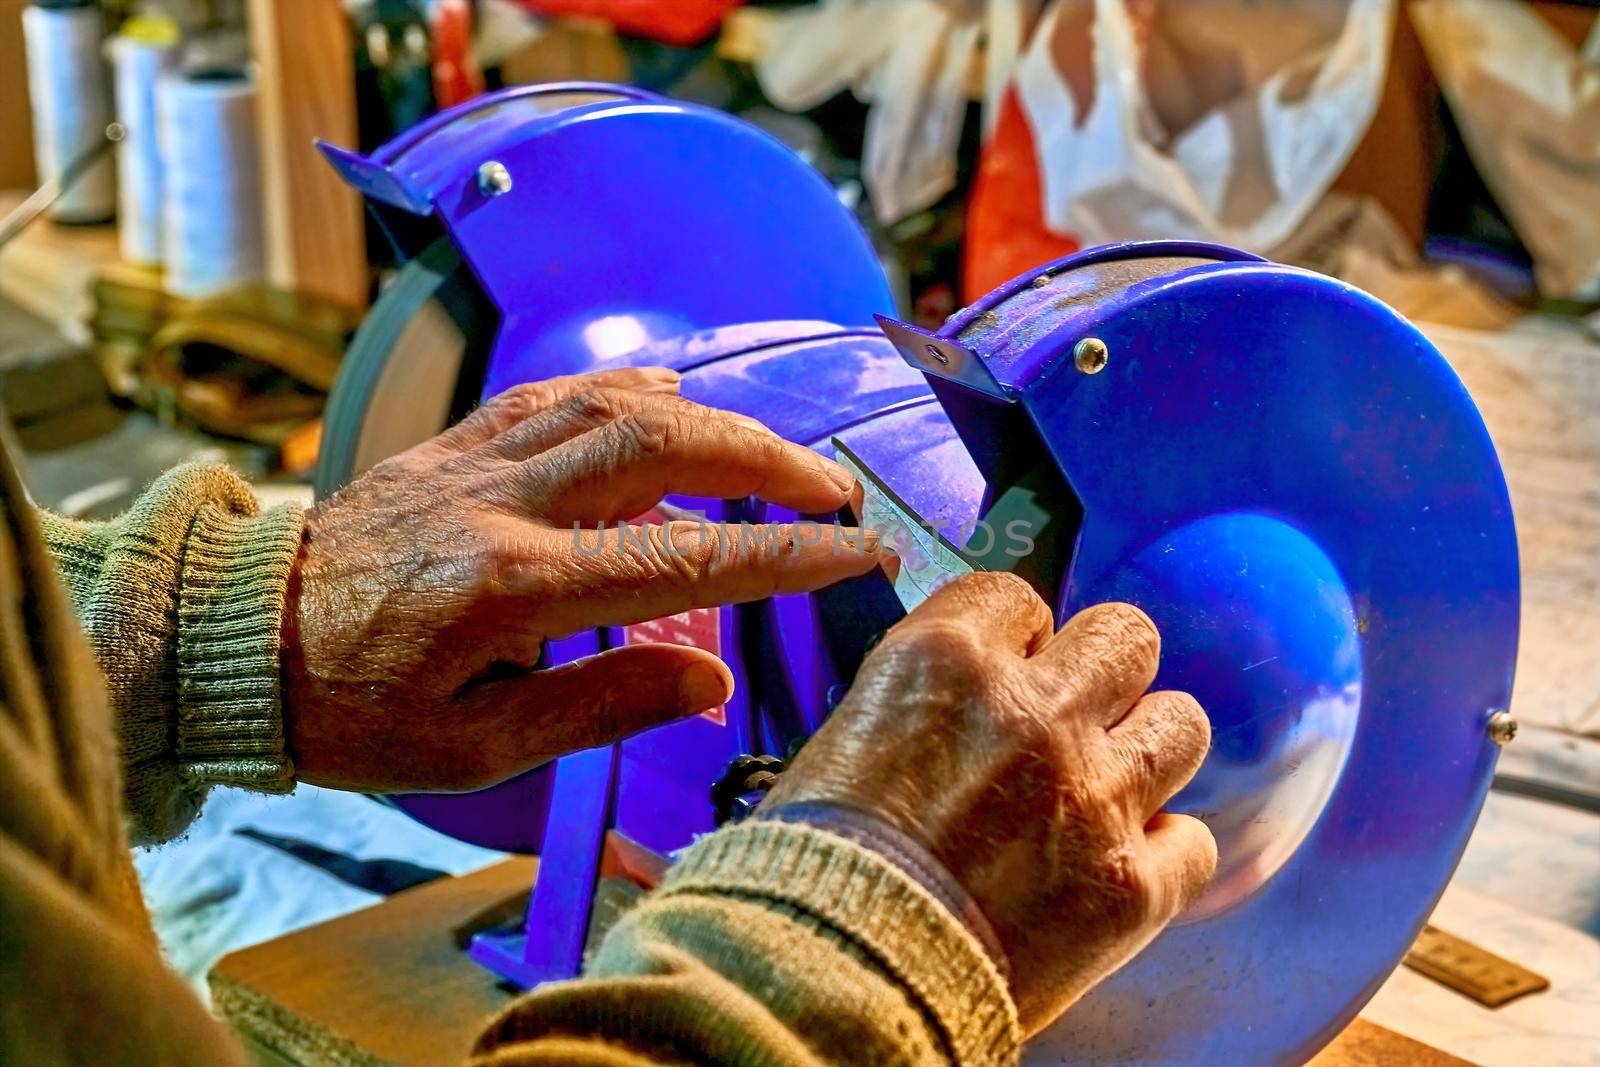 Hands of an elderly man sharpening a knife on a blue grinder by jovani68